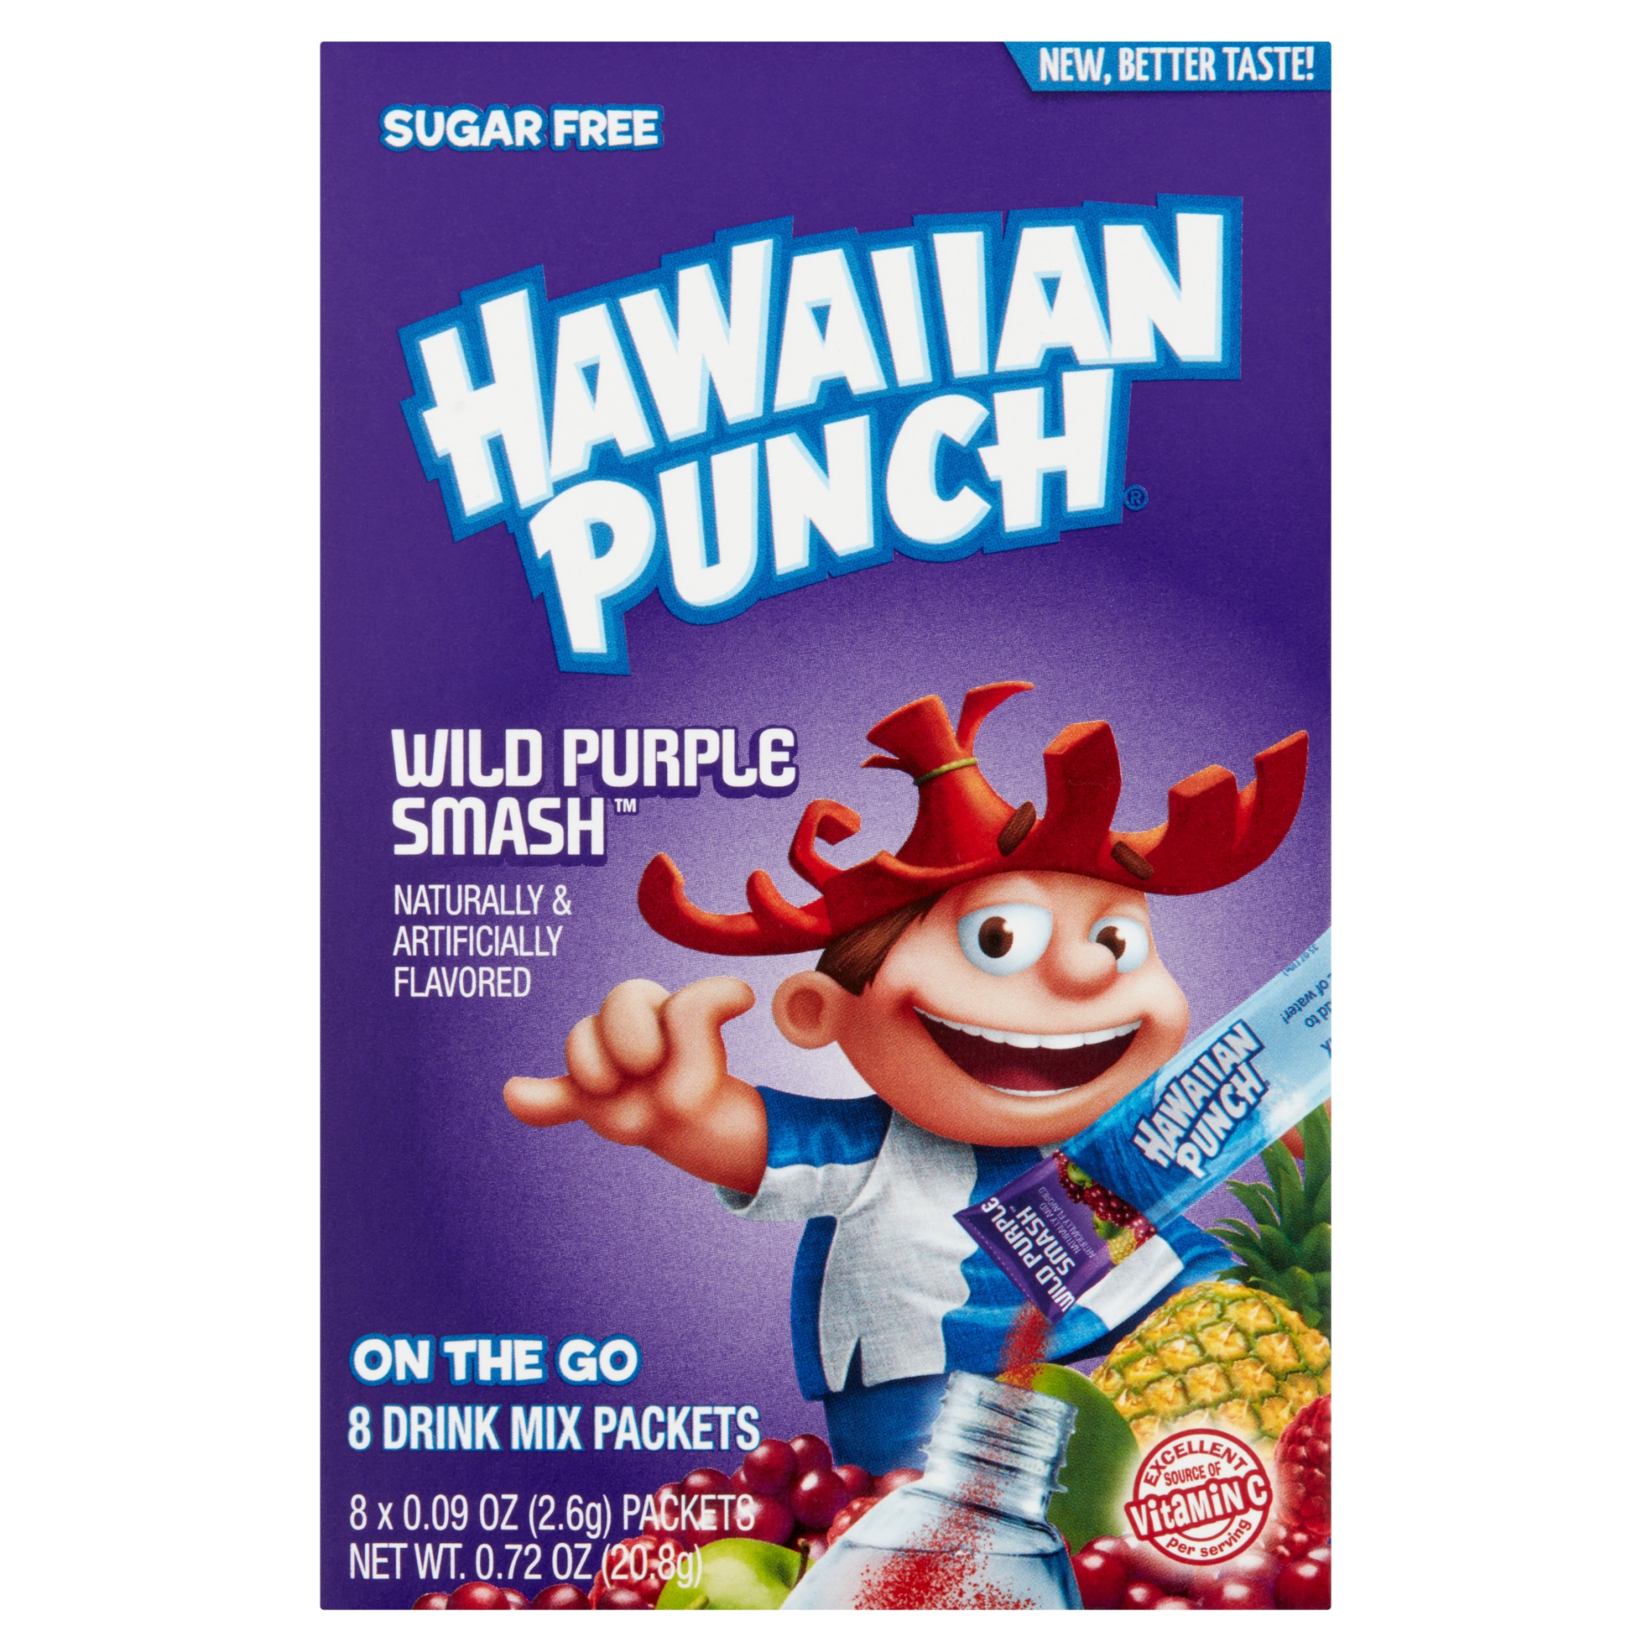 Singles to Go Hawaiian Punch Wild Purple Smash 8 Pack